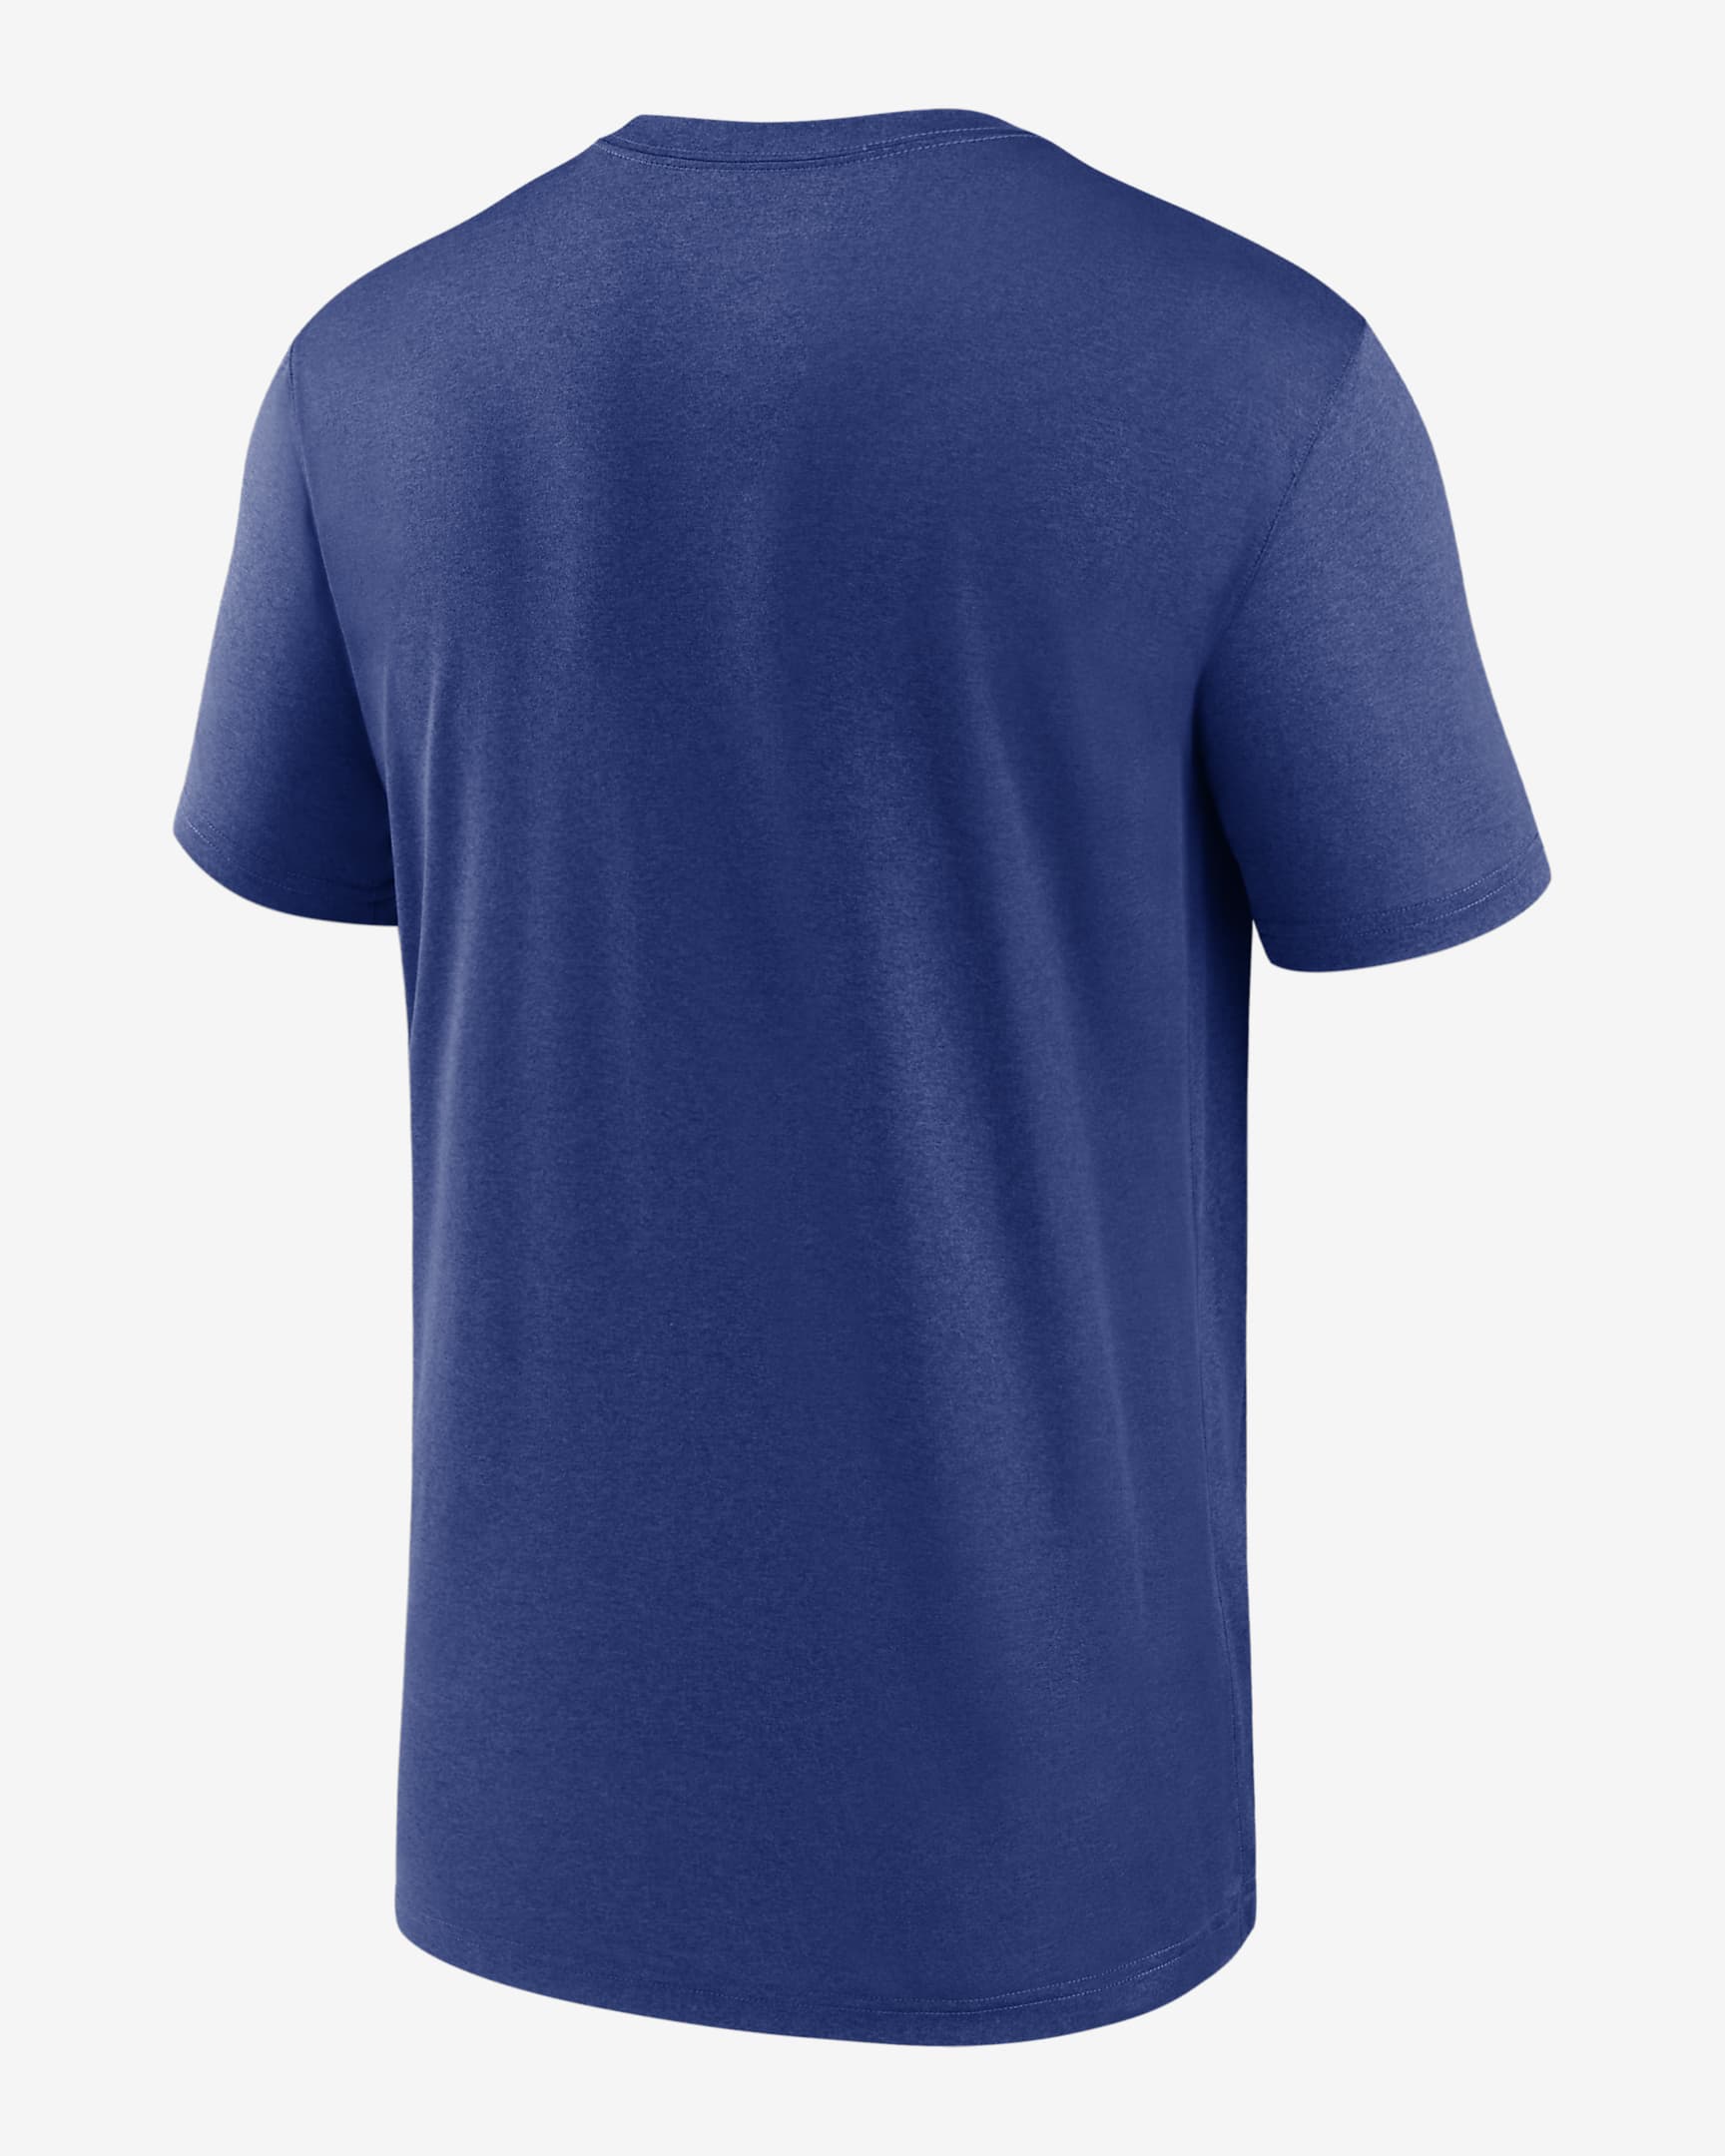 Nike Dri-FIT Swoosh Legend (MLB New York Mets) Men's T-Shirt. Nike.com